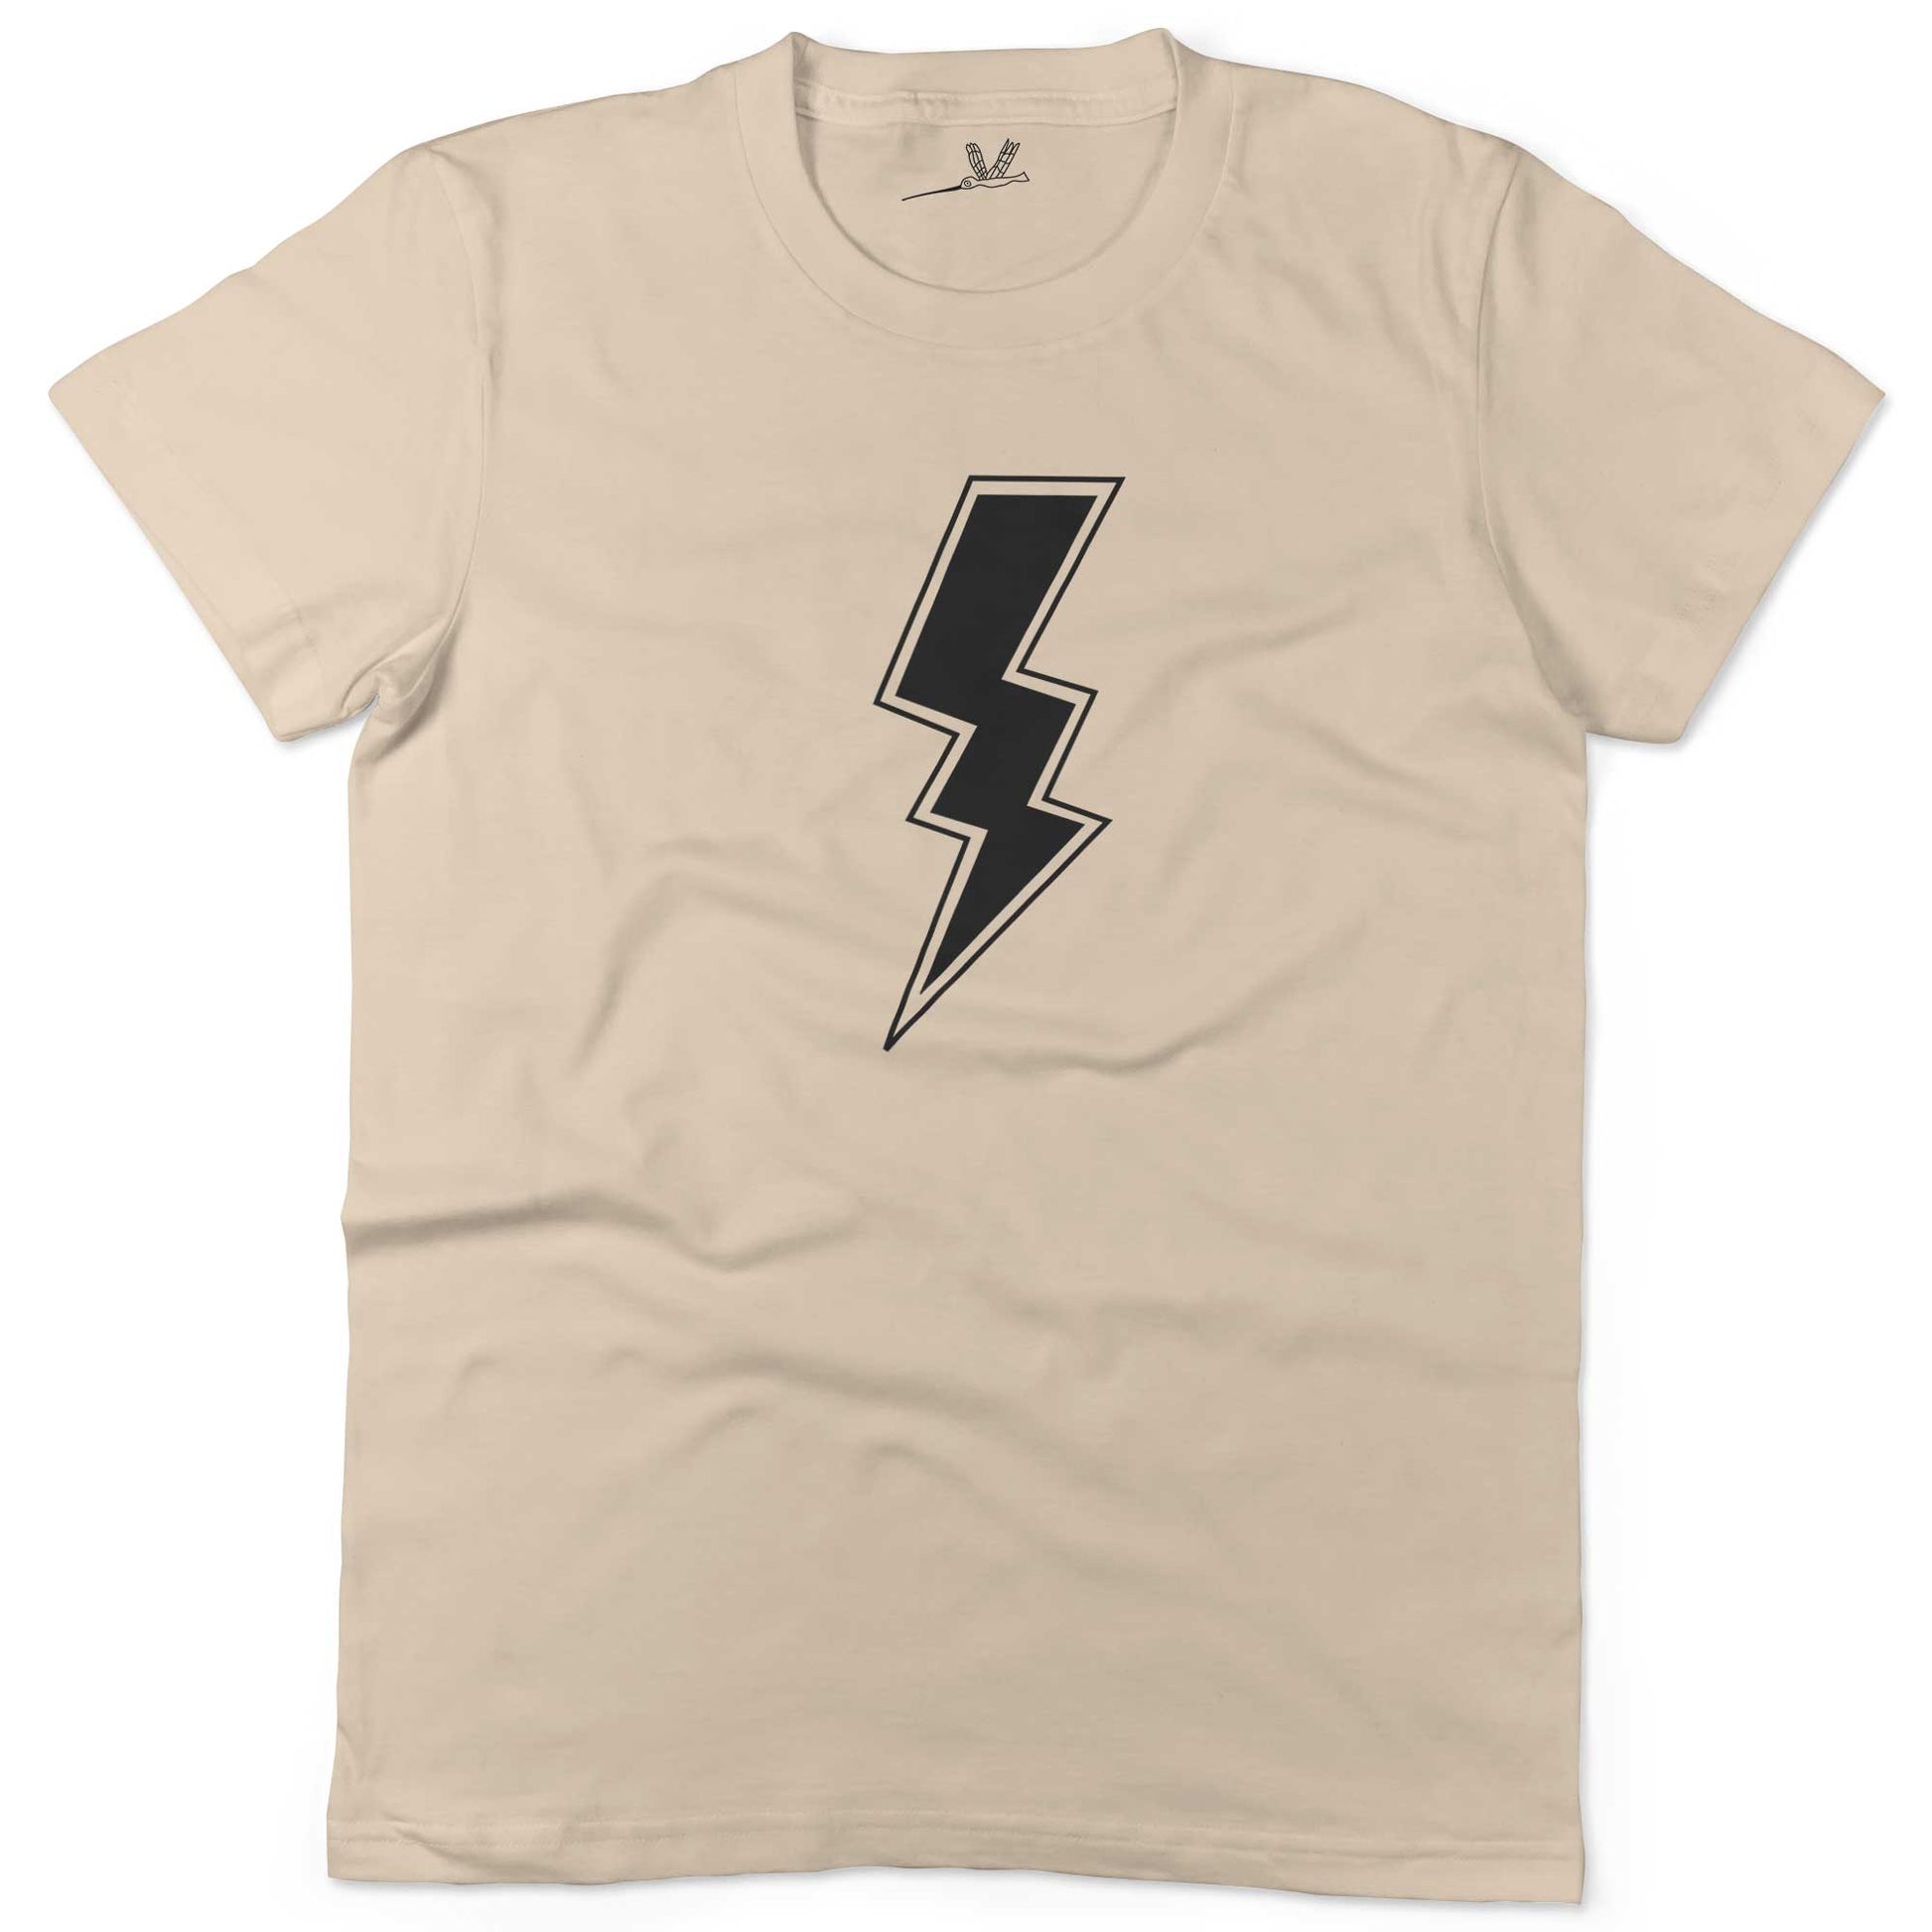 Giant Lightning Bolt Unisex Or Women's Cotton T-shirt-Organic Natural-Woman